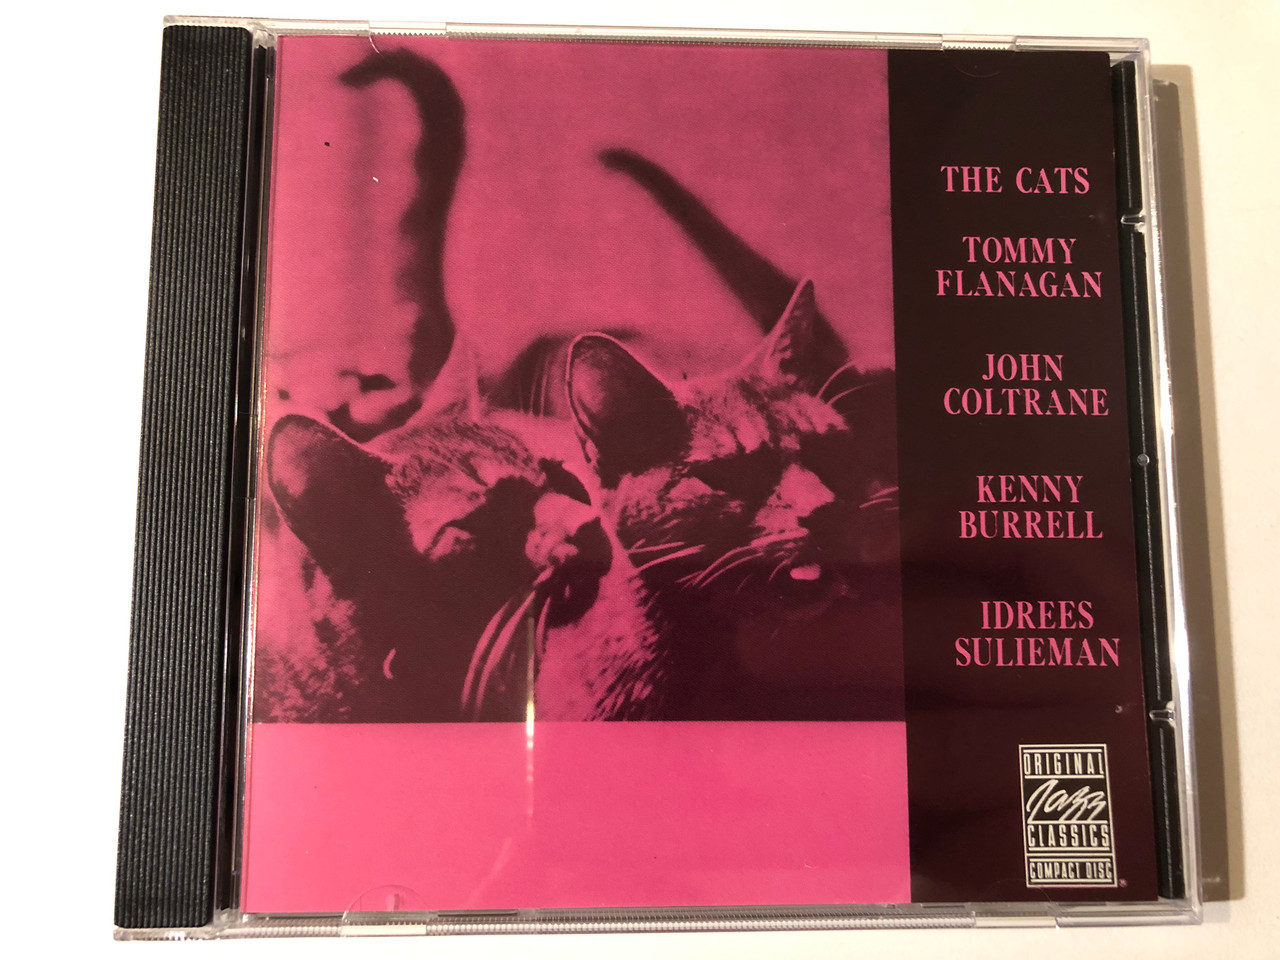 John Coltrane, Tommy Flanagan, Idrees Sulieman, Kenny Burrell - The Cats [Original Jazz Classics Series LP]